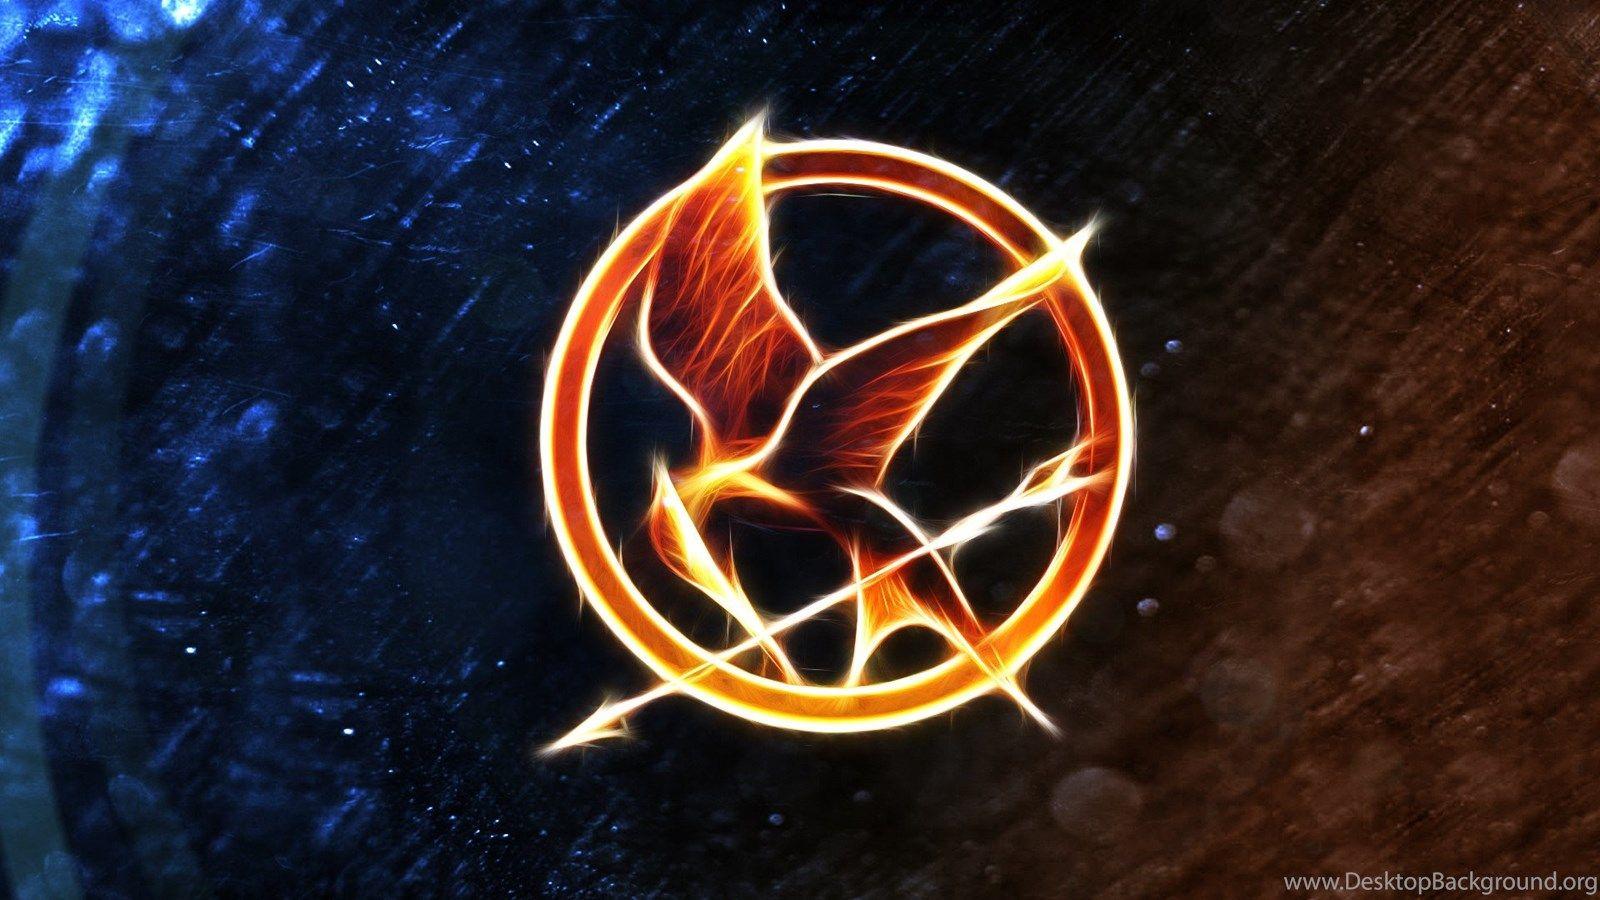 Mockingjay pt.2 - The Hunger Games Wallpaper (38934260) - Fanpop